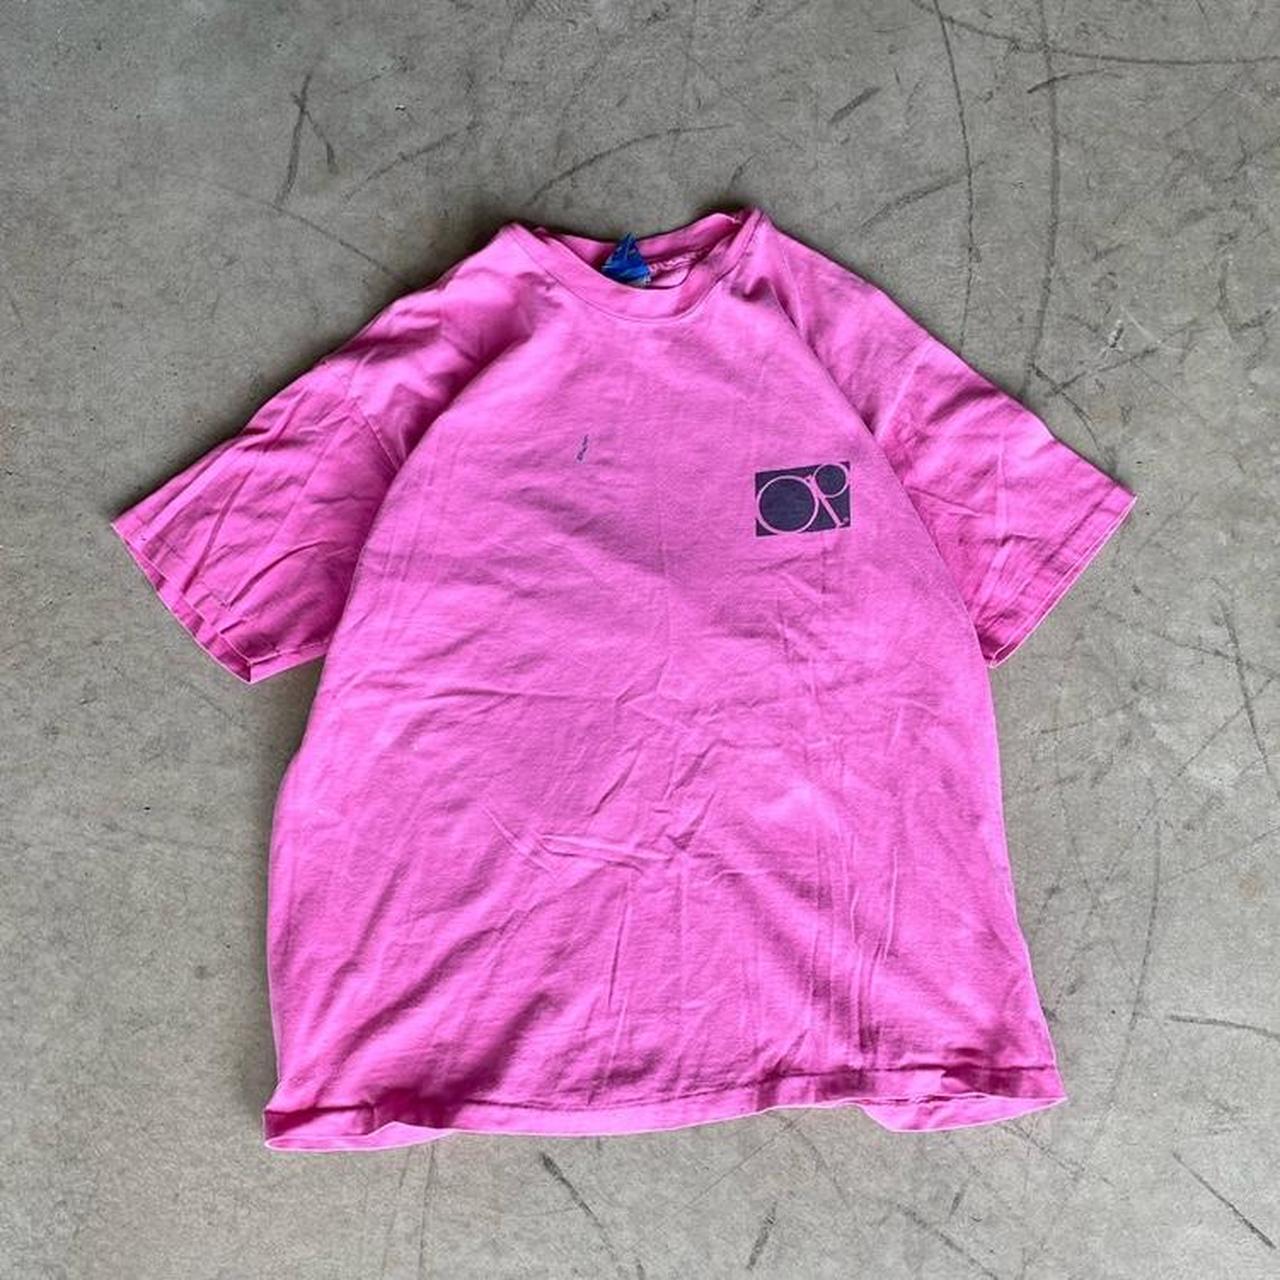 Ocean Pacific Men's Pink and Black T-shirt